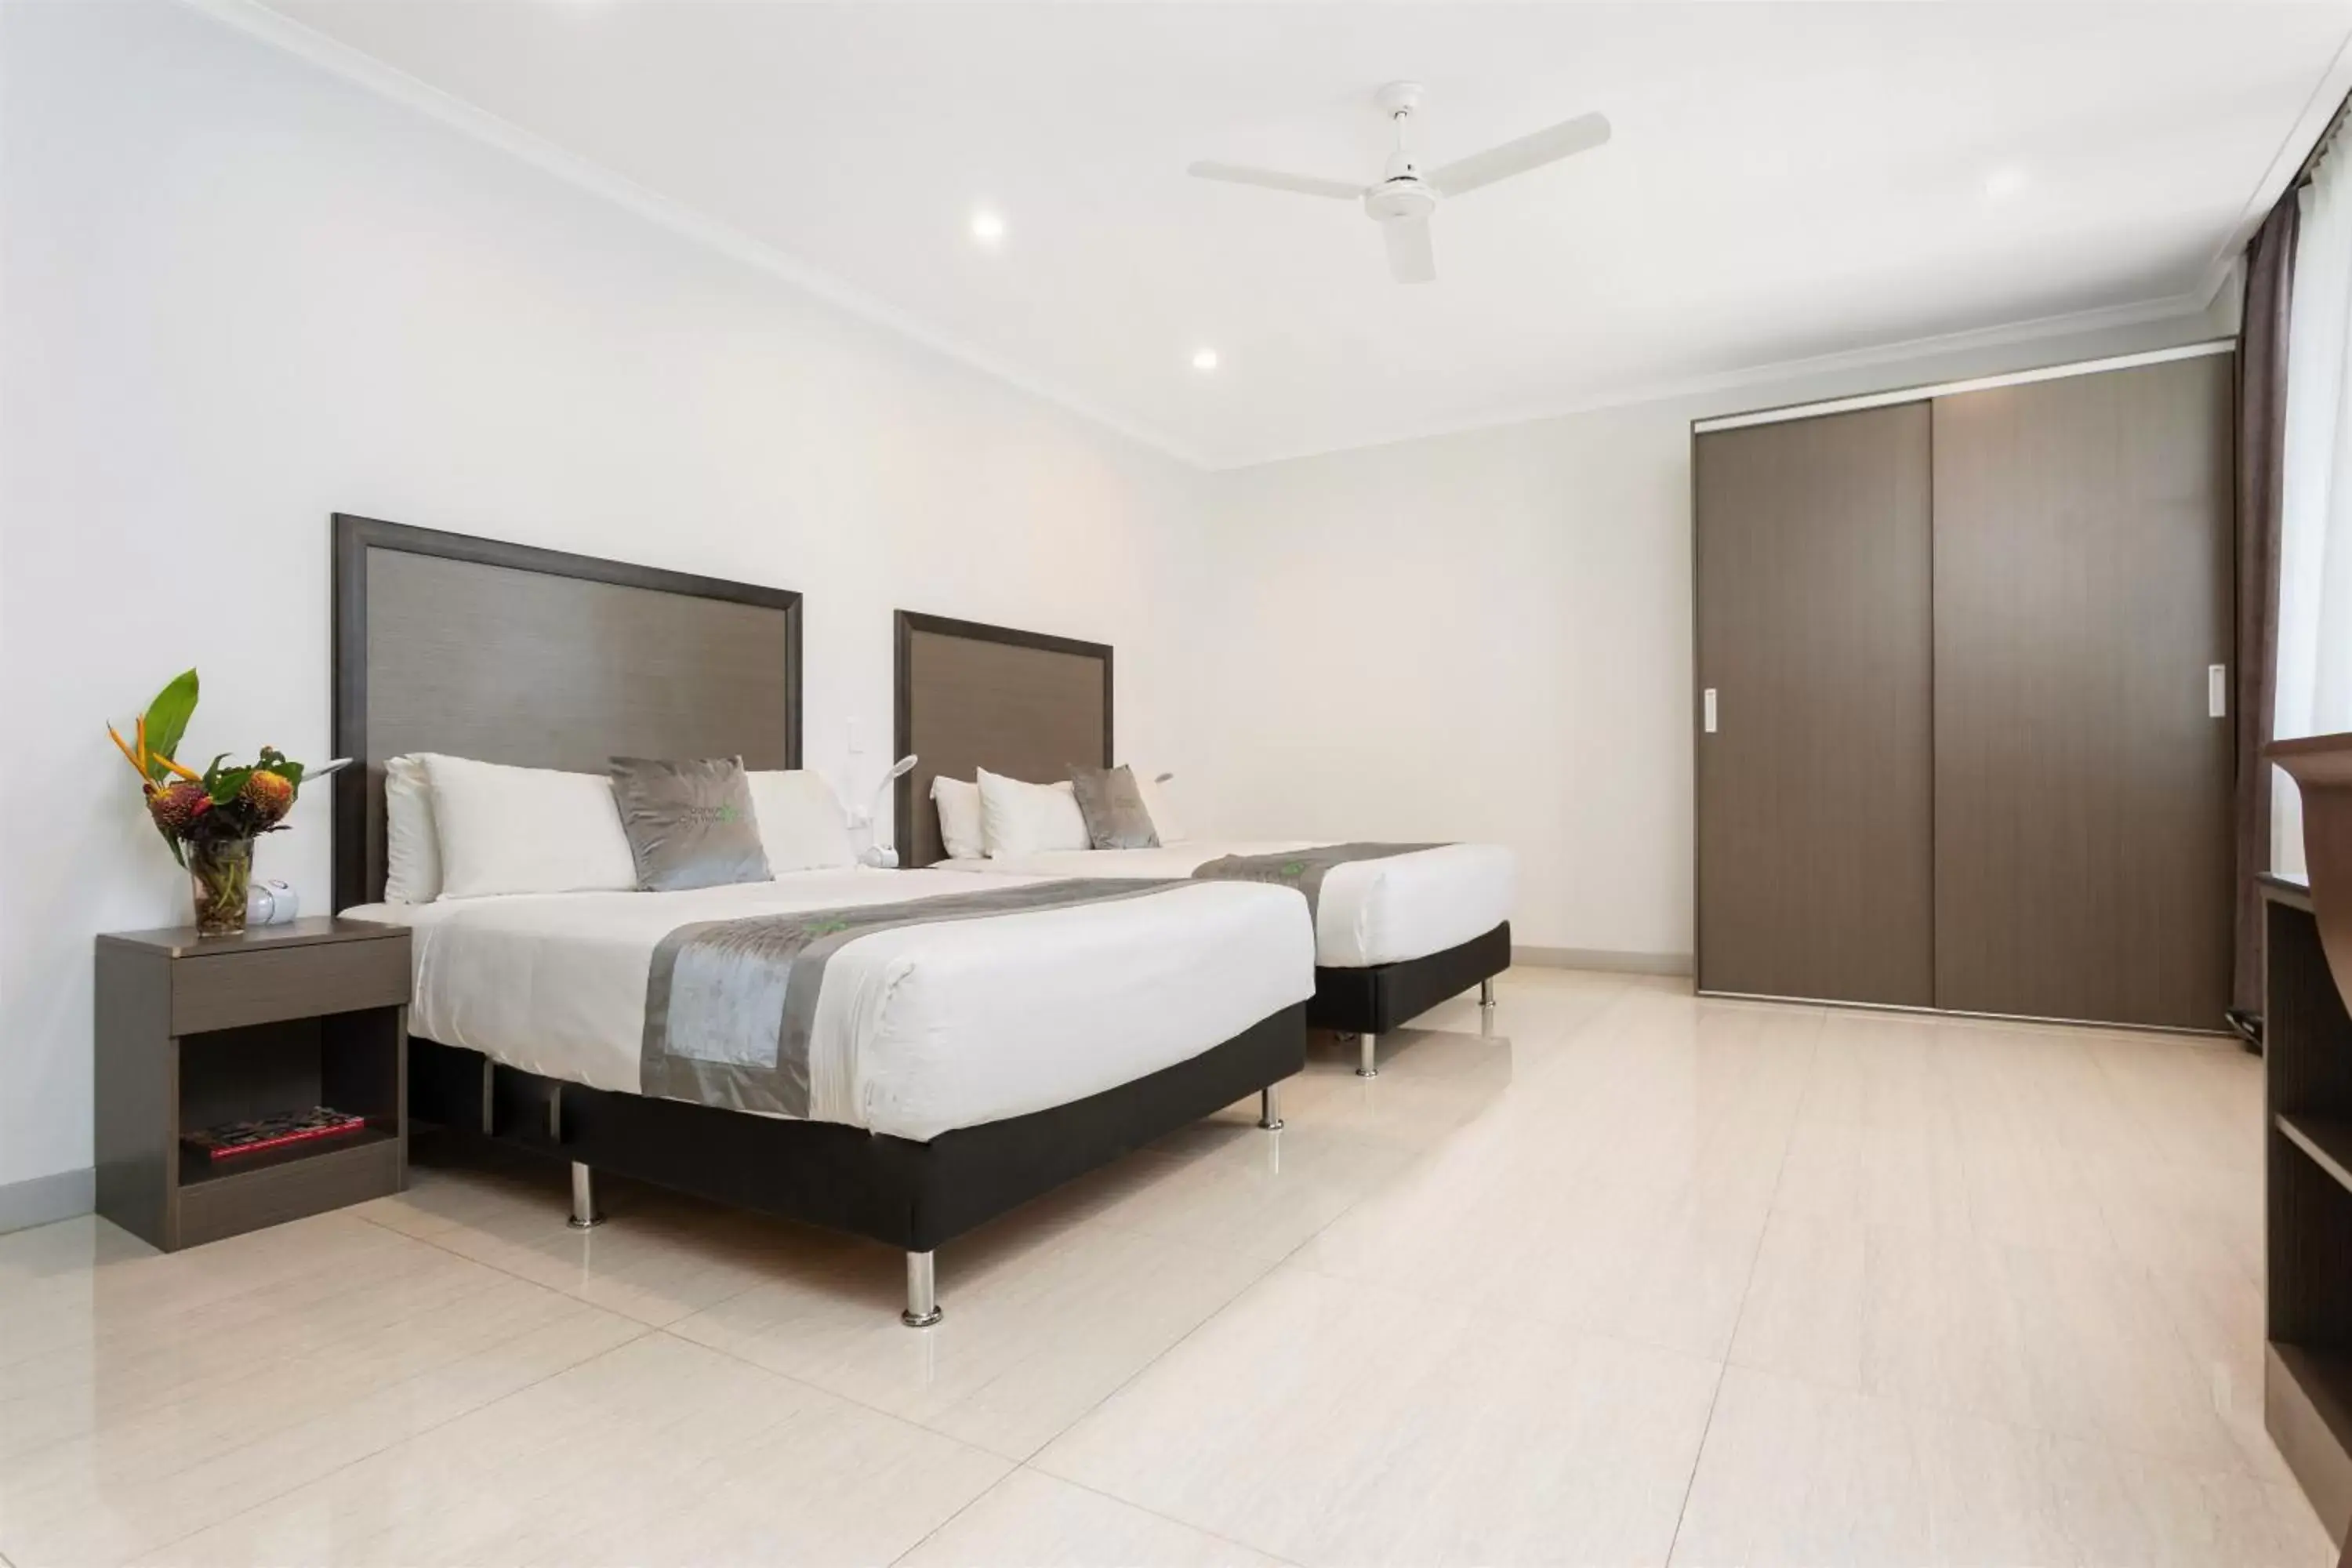 Bed in Darwin City Hotel